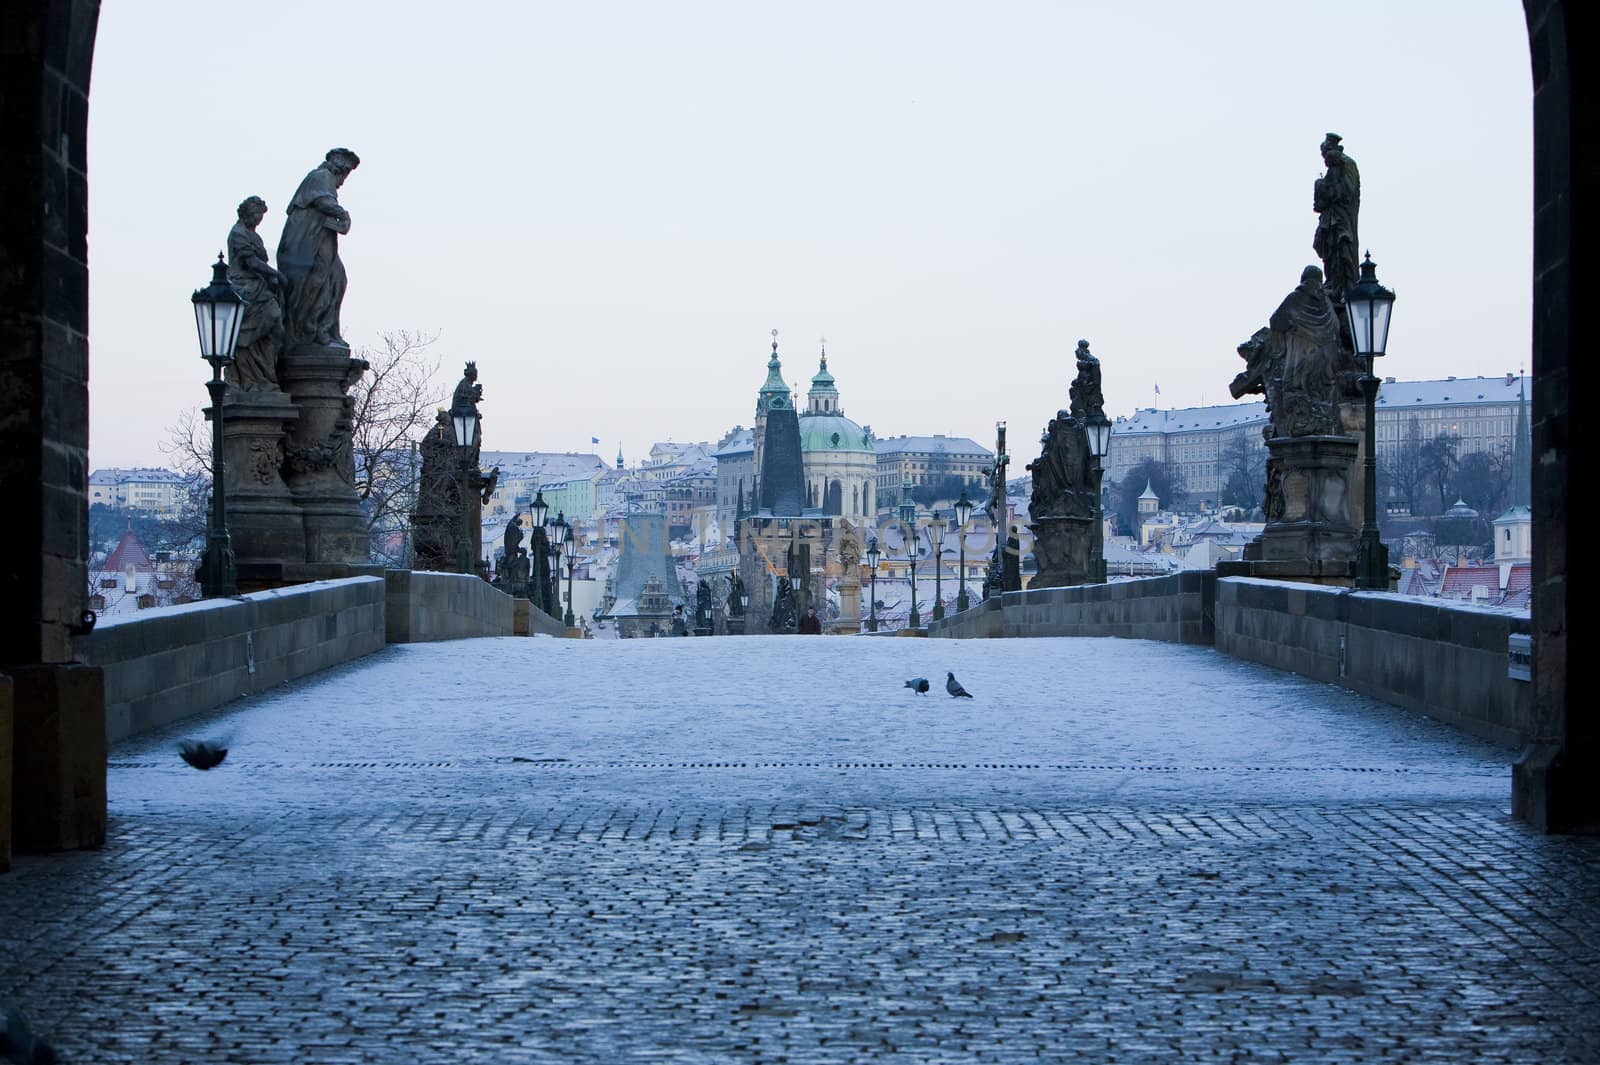 Charles Bridge in winter, Prague, Czech Republic